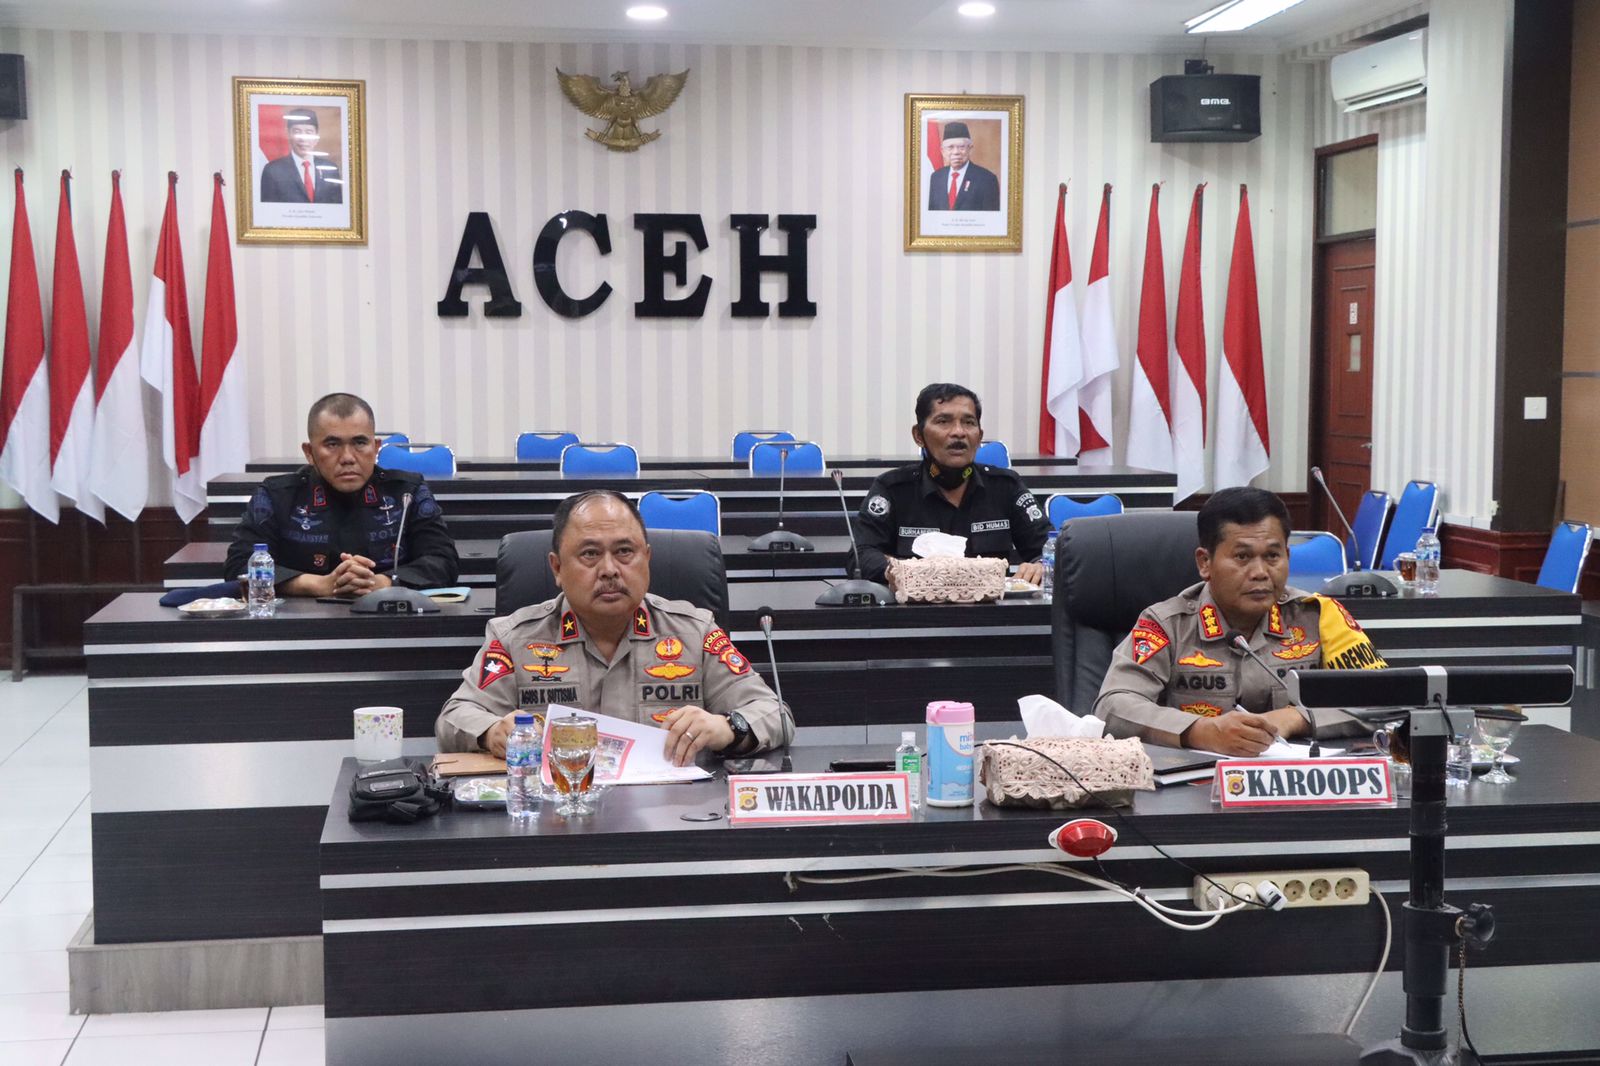 Wakapolda Aceh Ikut Rakor Penanganan PMK bersama BNPB